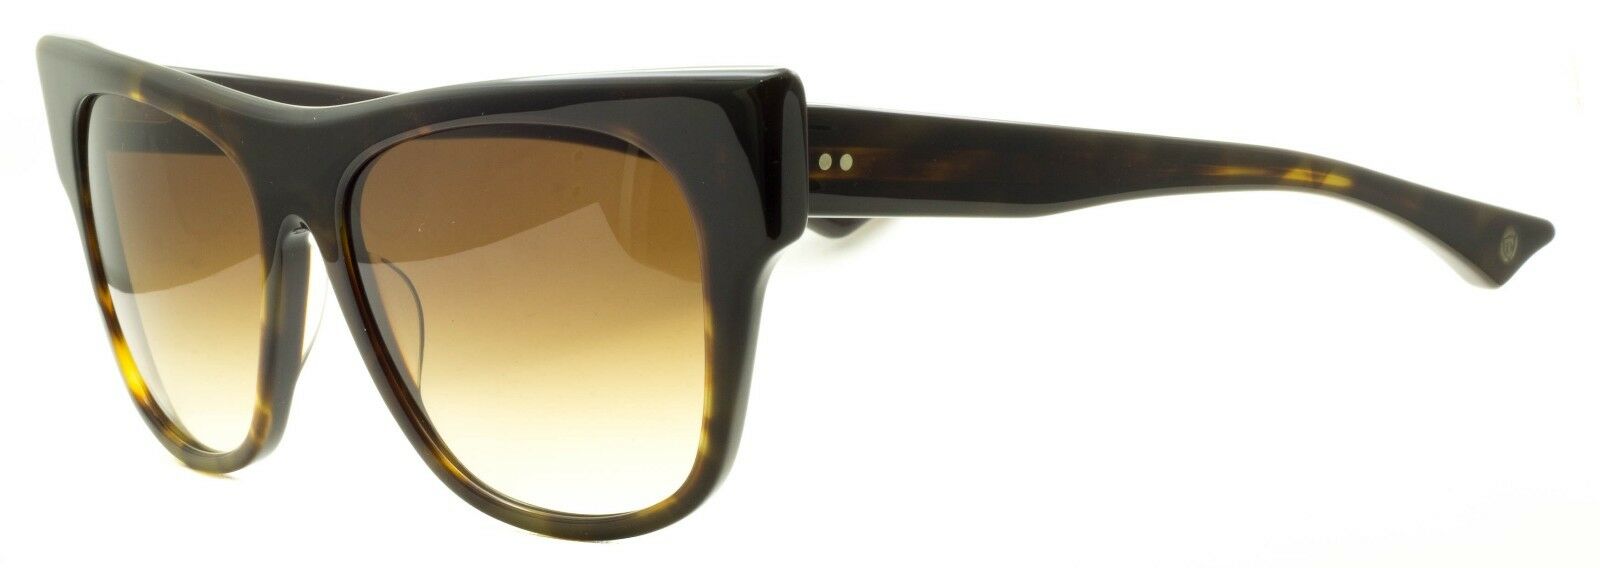 DITA ARRIFANA 22022-B-T-TRT-56 Sunglasses Shades Glasses Eyewear